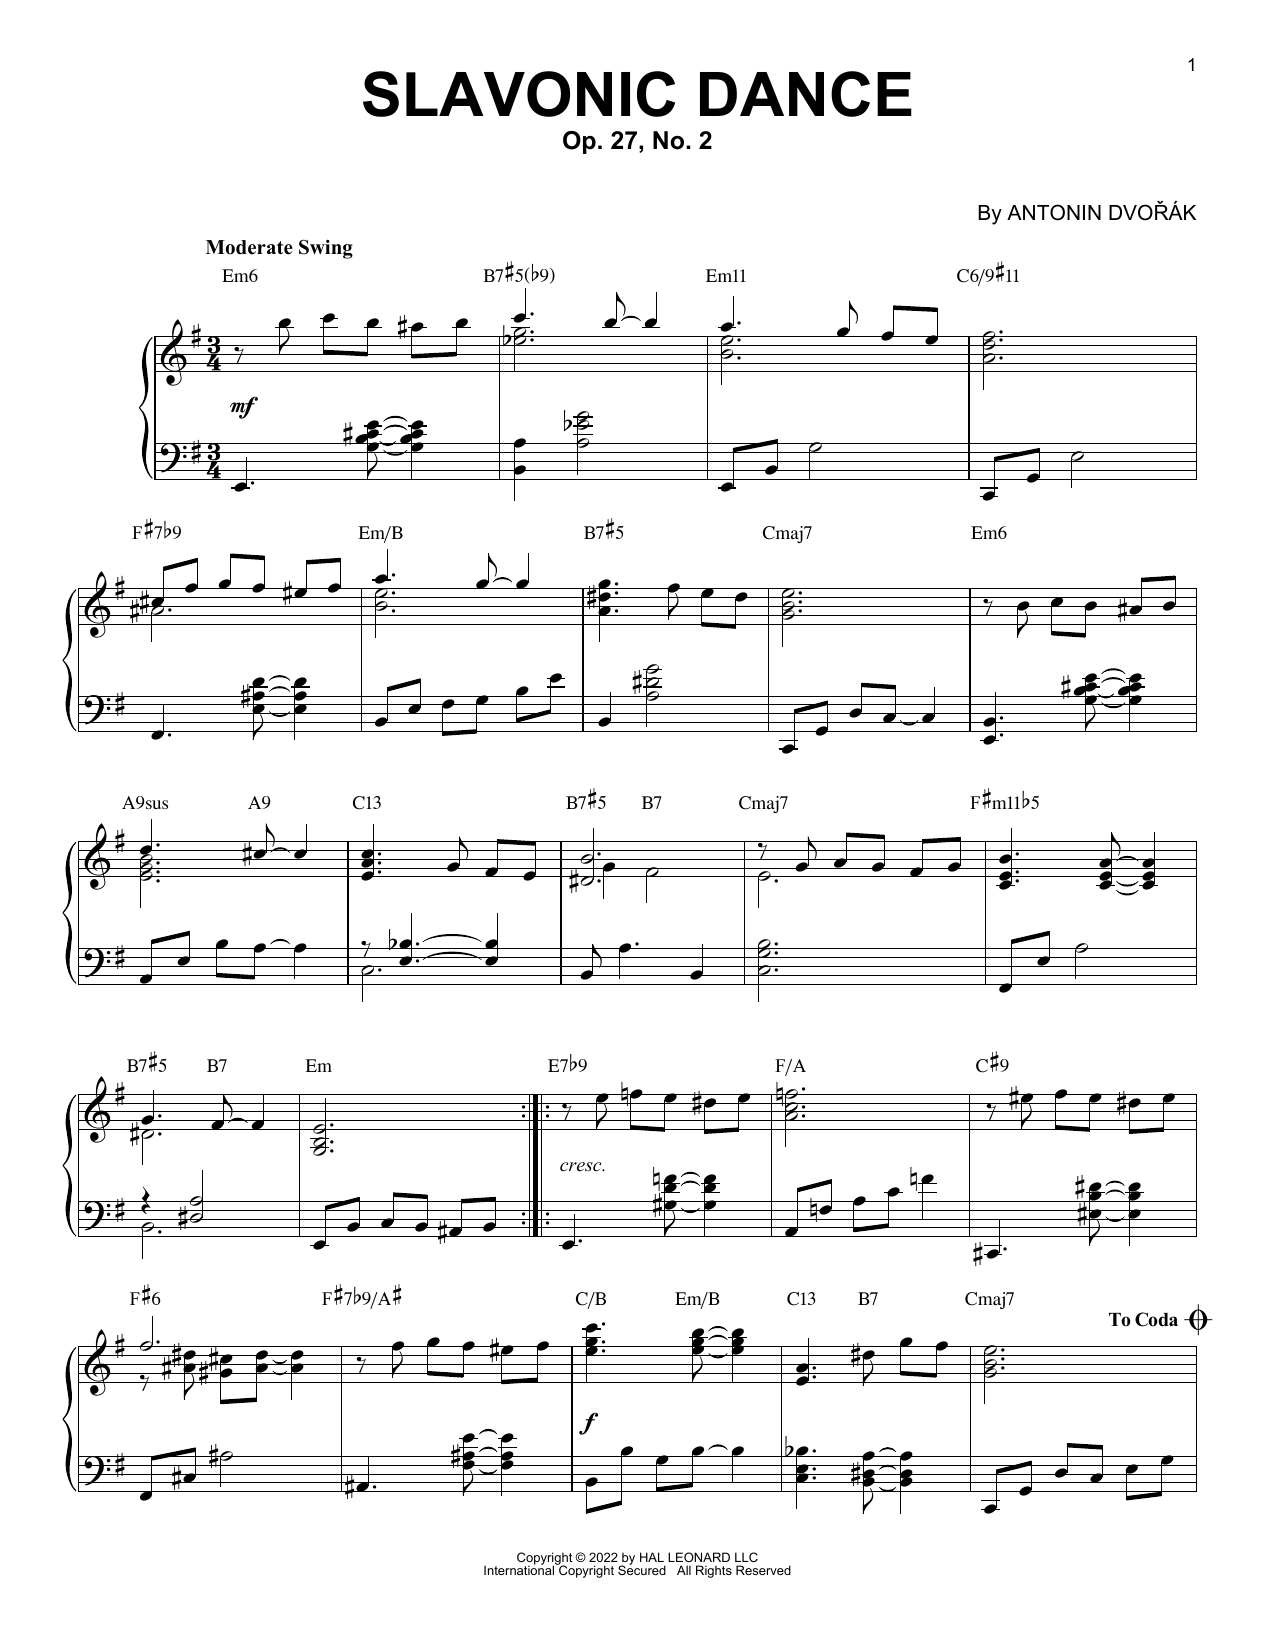 Antonin Dvorak Slavonic Dance #2 [Jazz version] (arr. Brent Edstrom) Sheet Music Notes & Chords for Piano Solo - Download or Print PDF